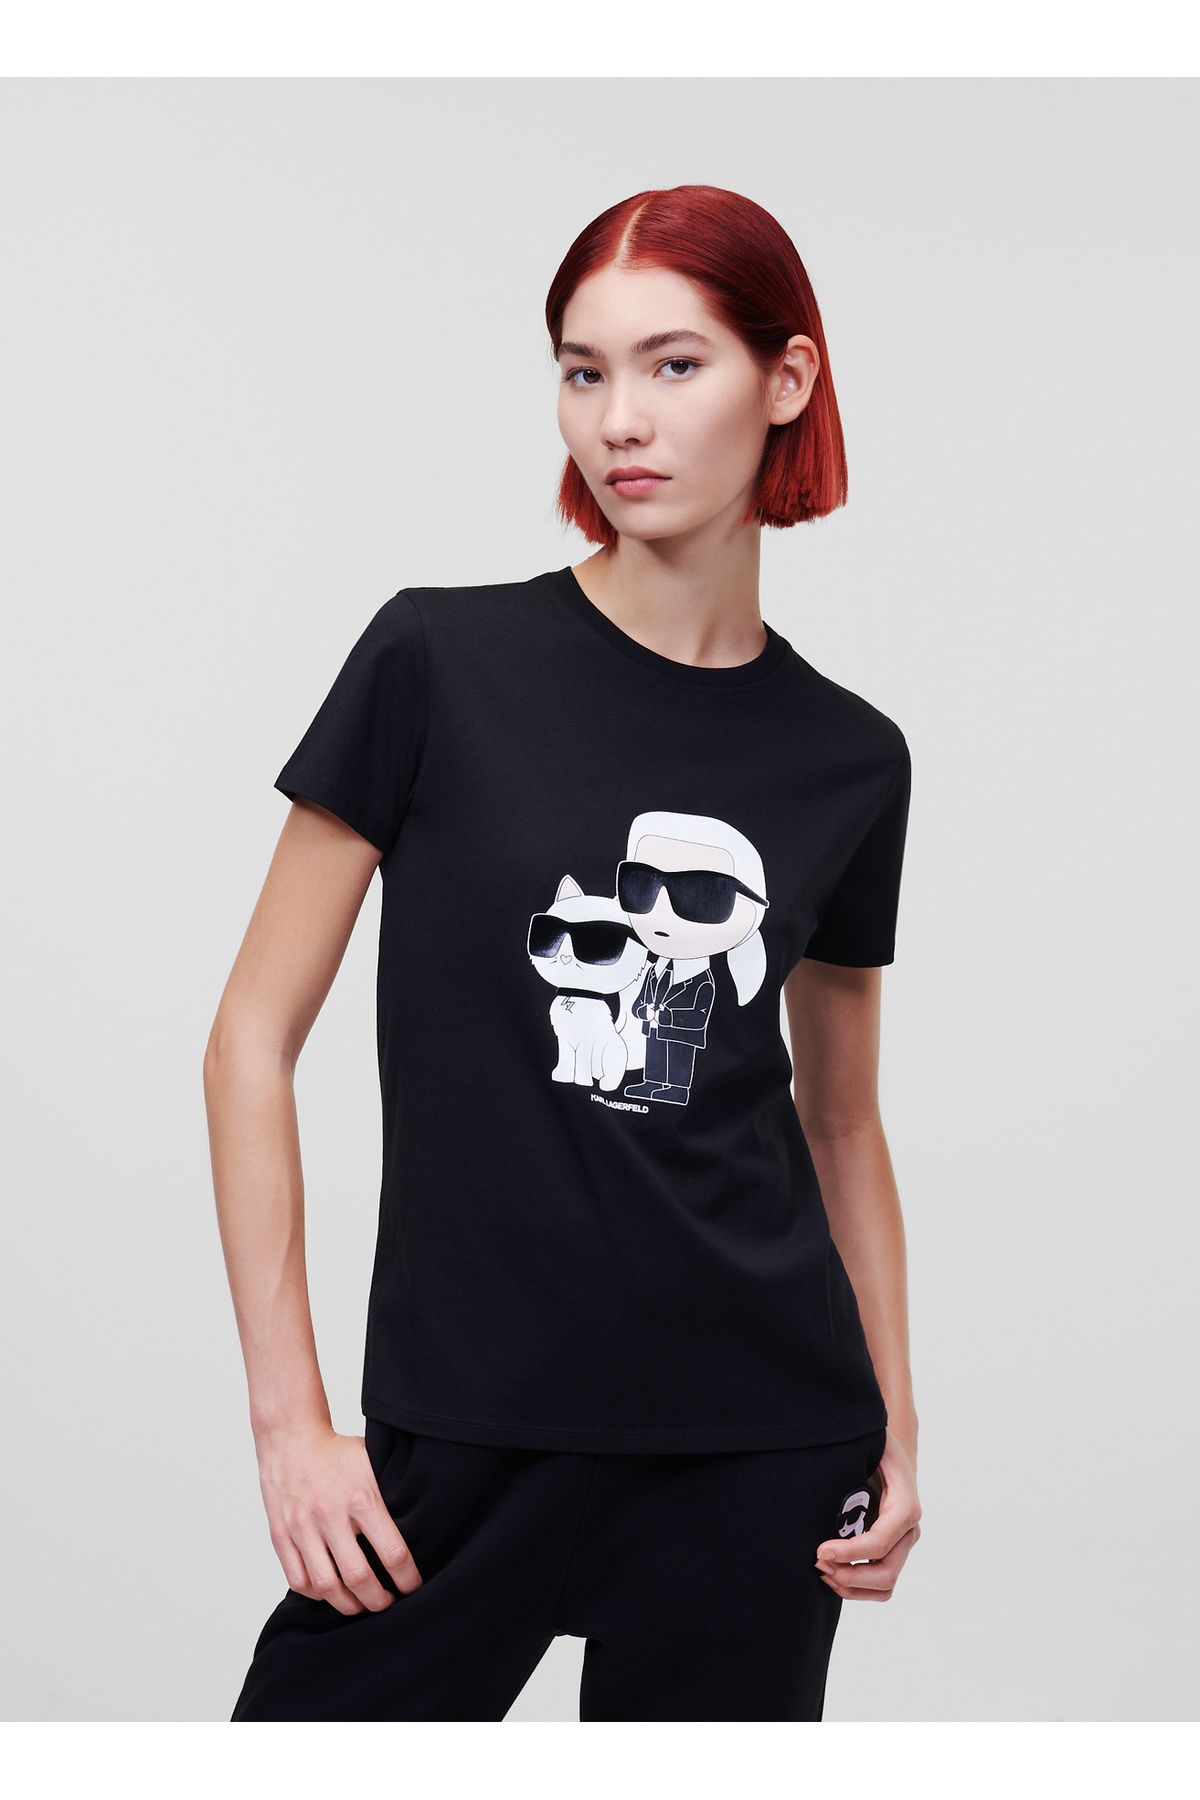 Karl Lagerfeld Bisiklet Yaka Baskılı Siyah Kadın T-Shirt 230W1704